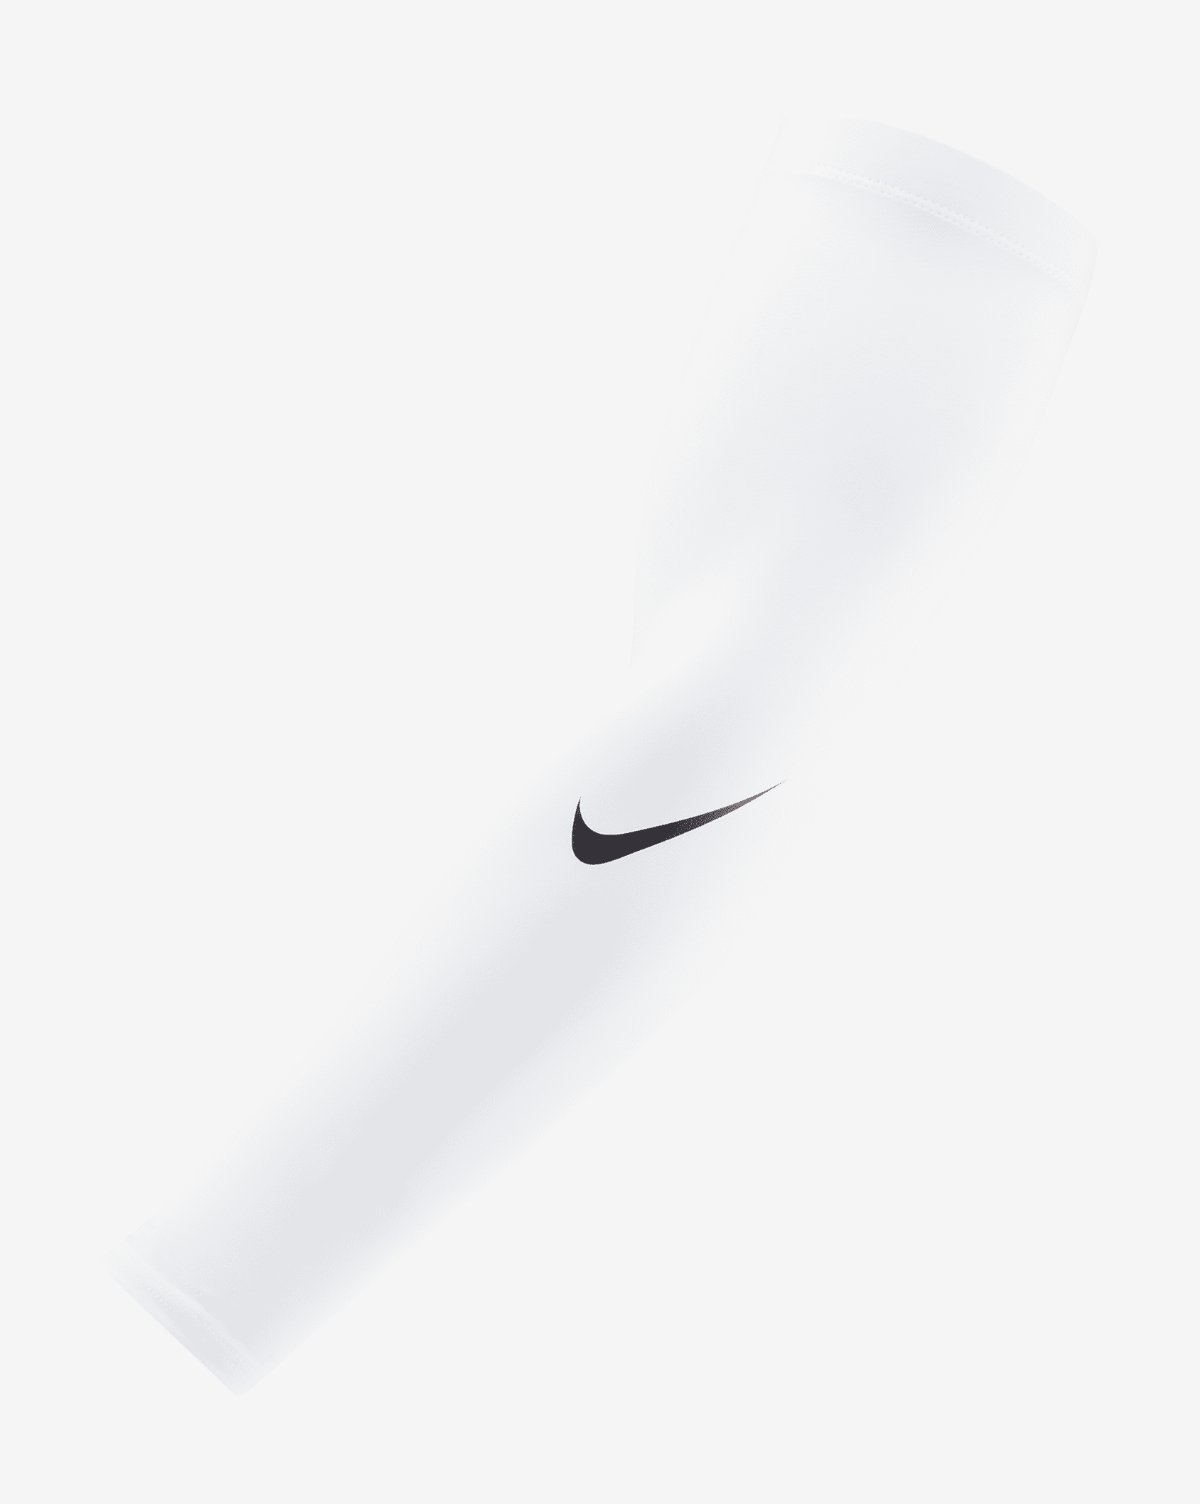 SOLELINKS on X: Ad: NEW Nike Pro Dri-FIT Sleeves dropped via Nike